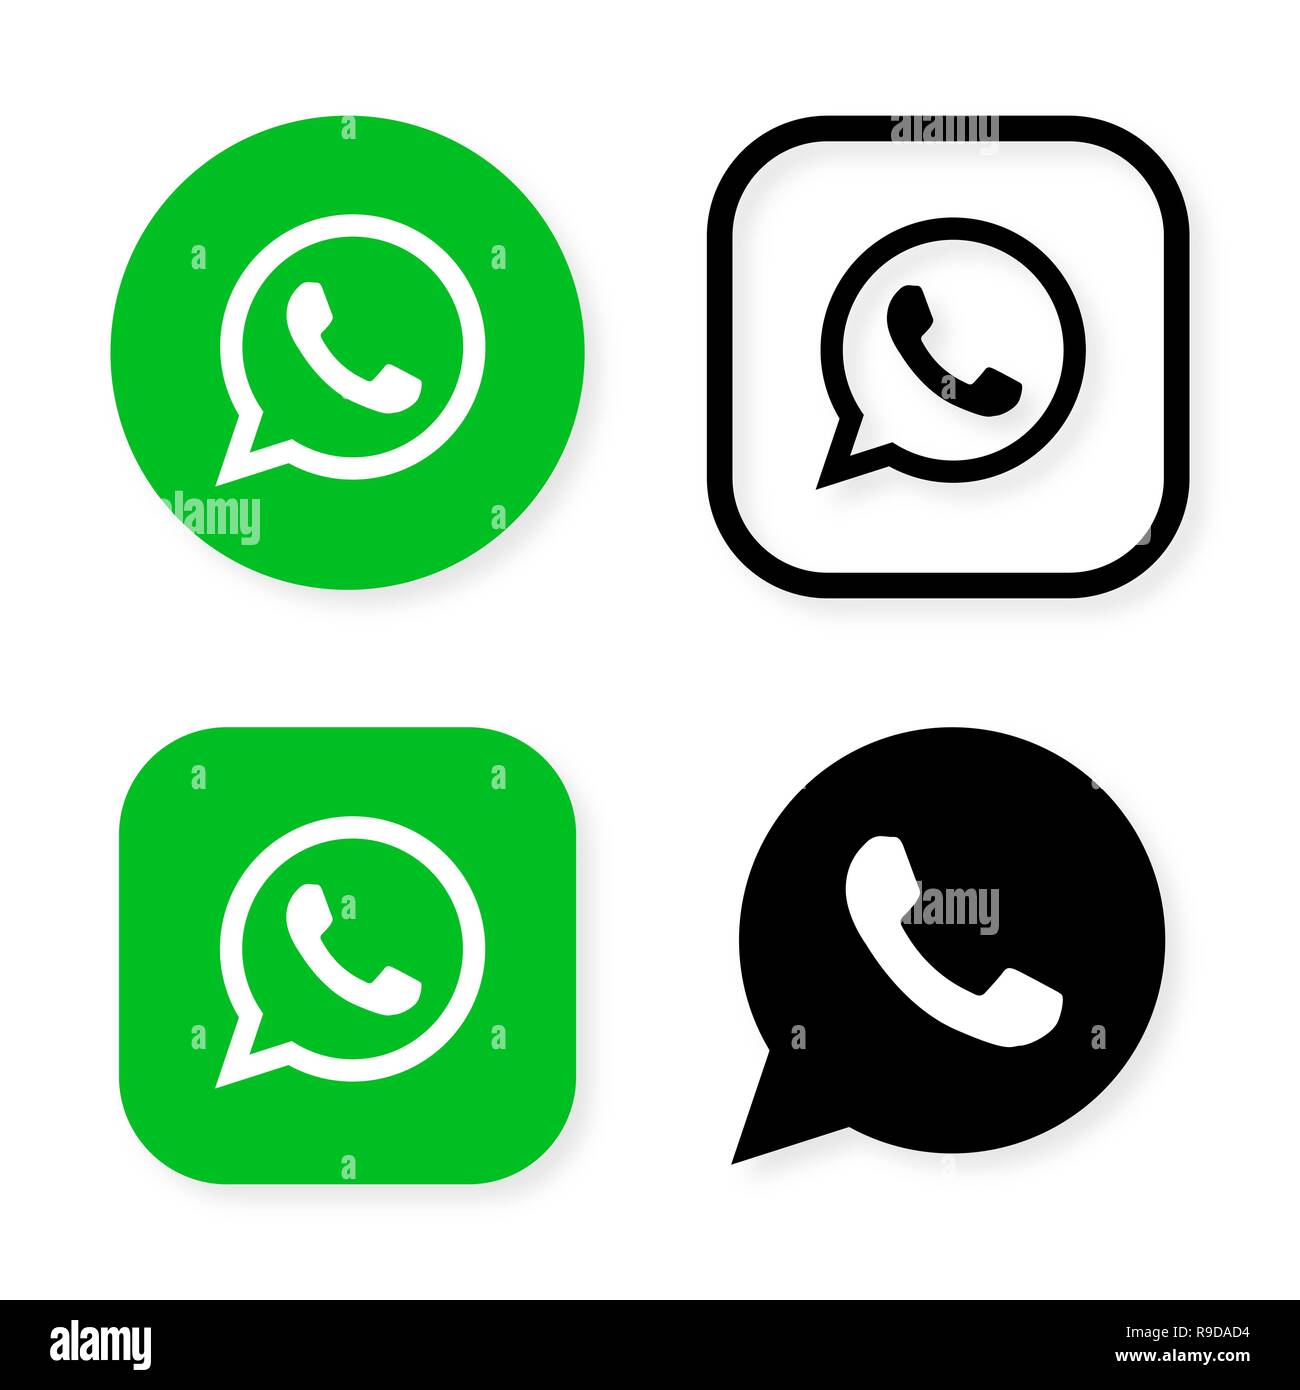 Phone App Symbols